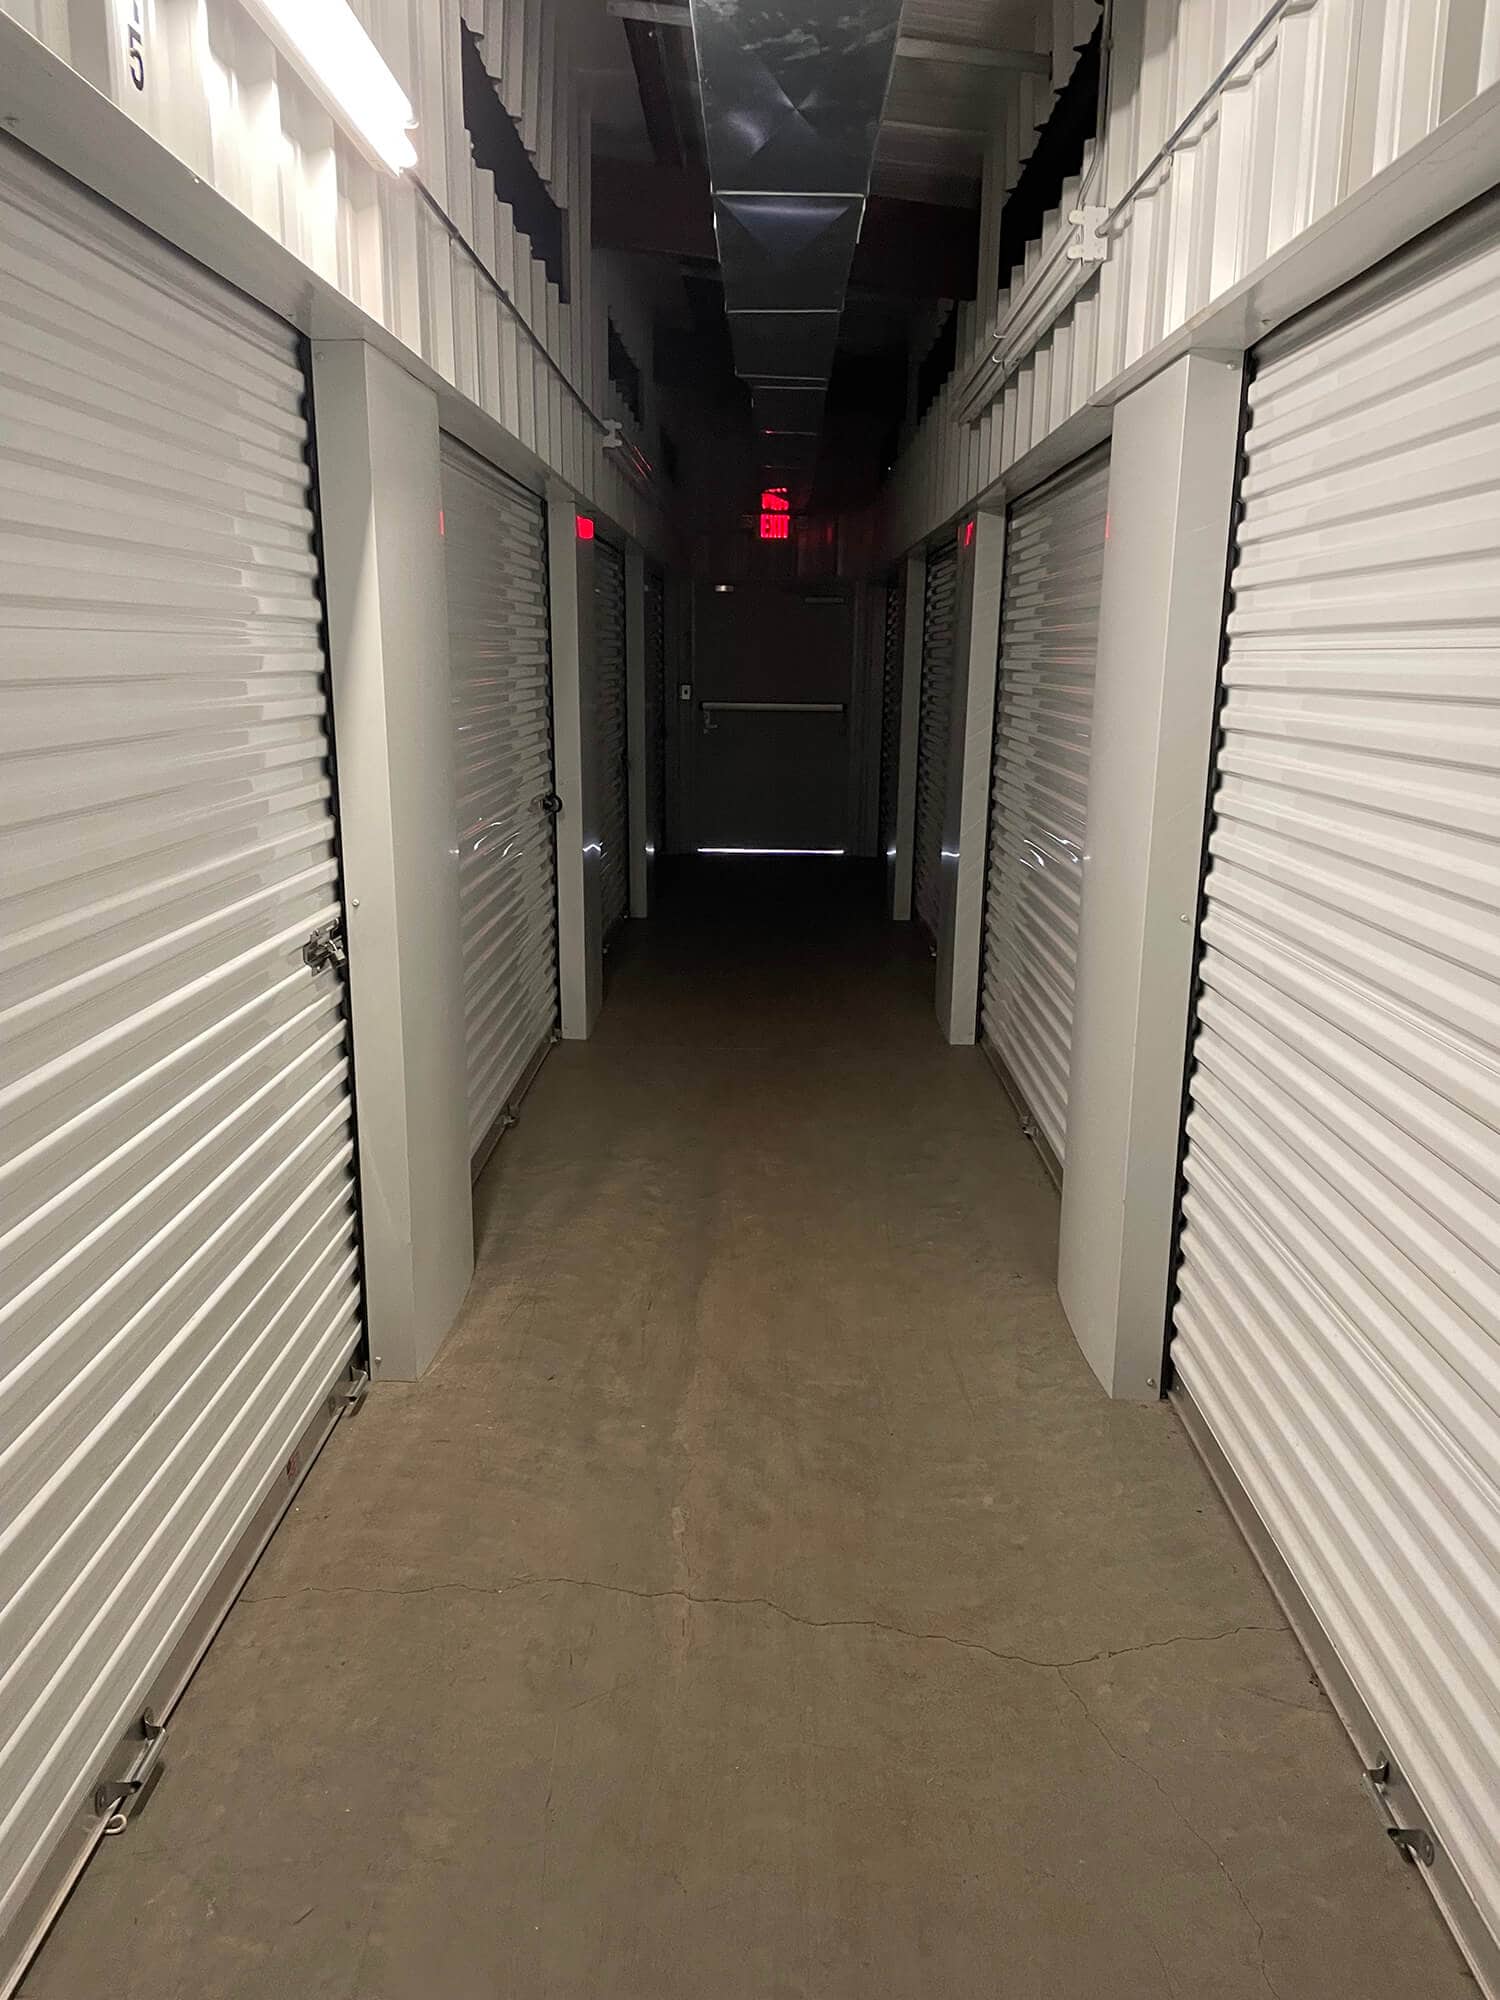 SafeNest Storage in Stanley NC, US, a storage place